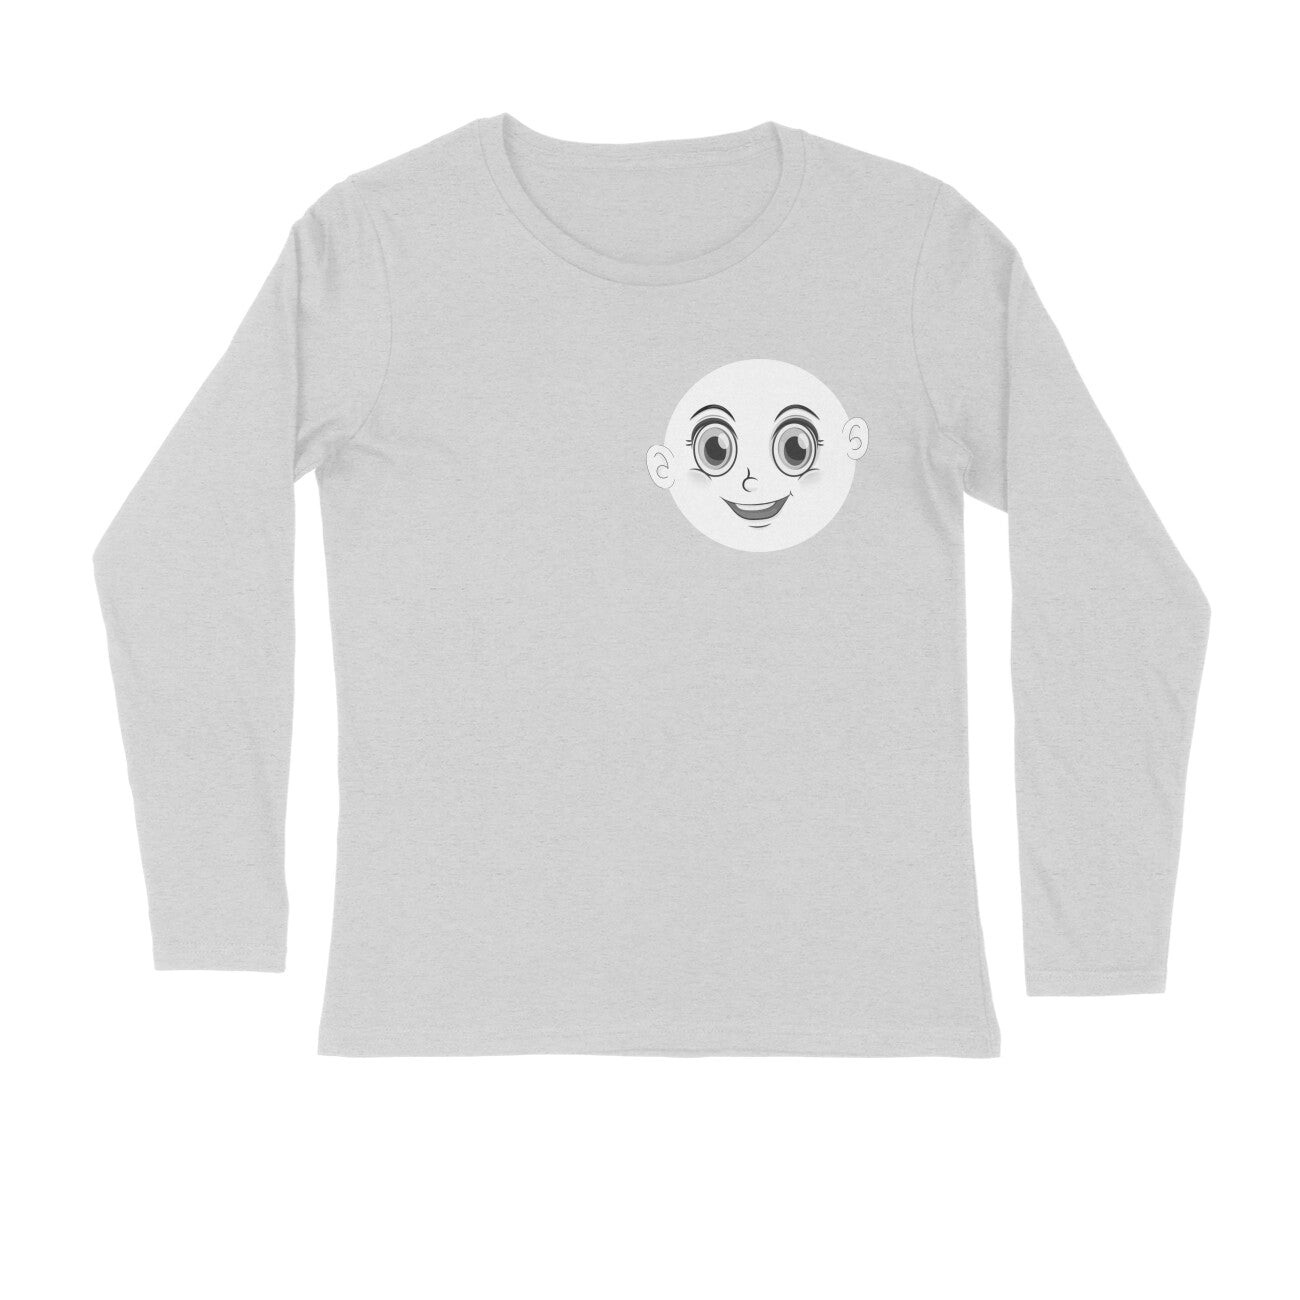 Smiley Face - Long Sleeve Unisex Tshirt